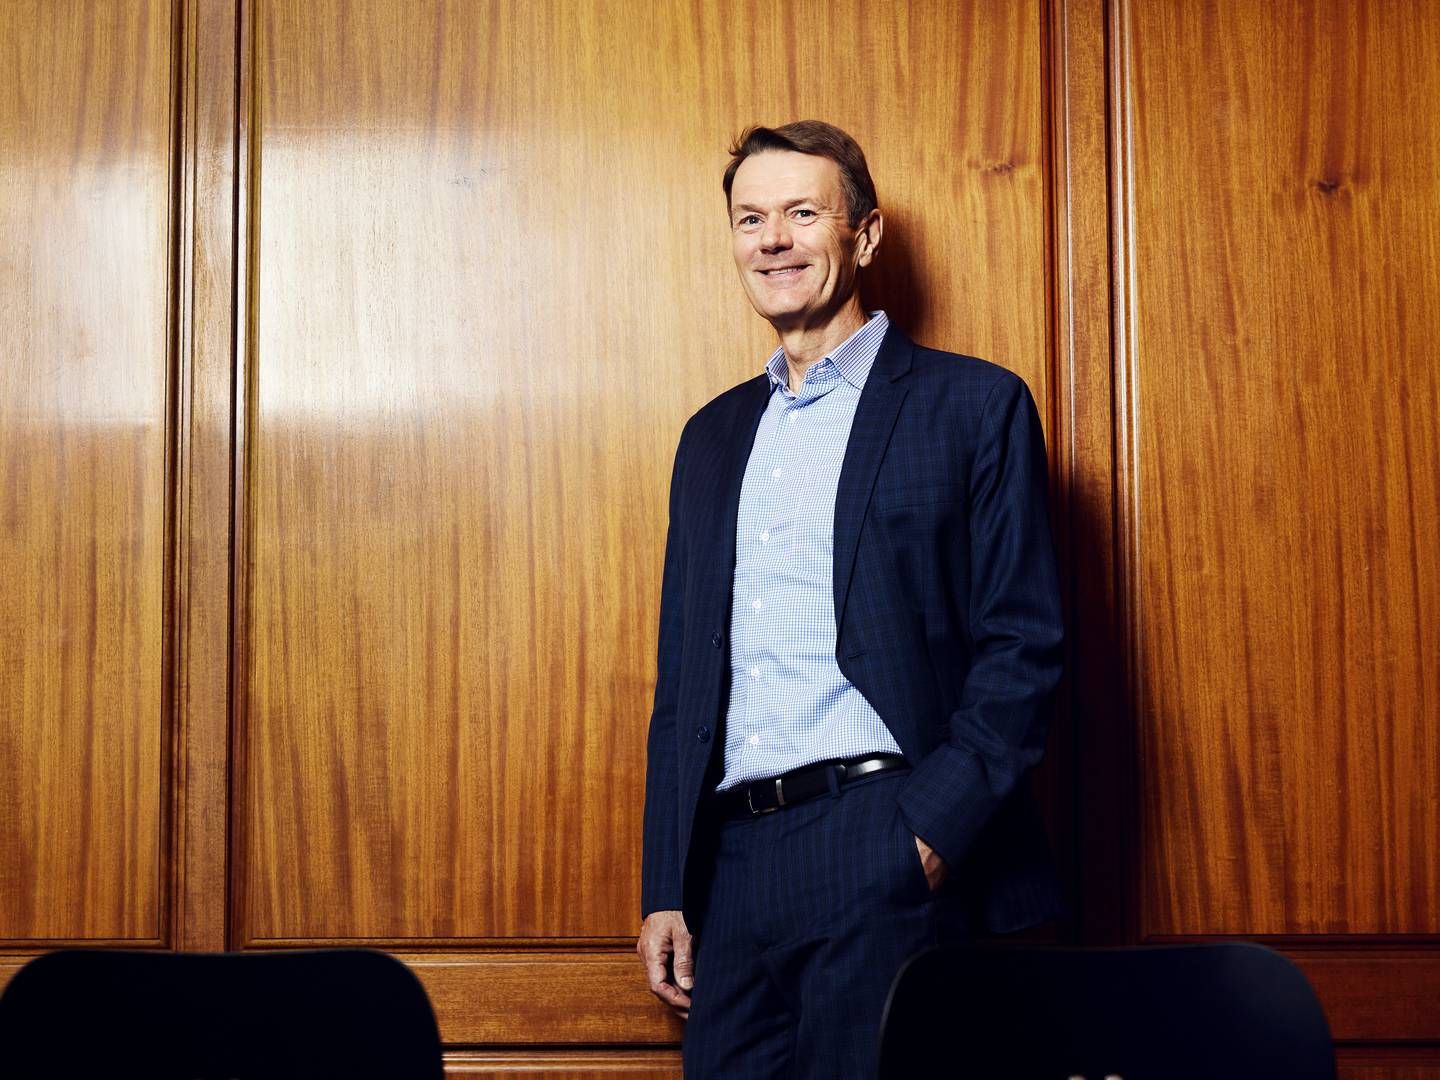 BankInvest's CEO, Lars Bo Bertram. | Photo: PR/Bankinvest